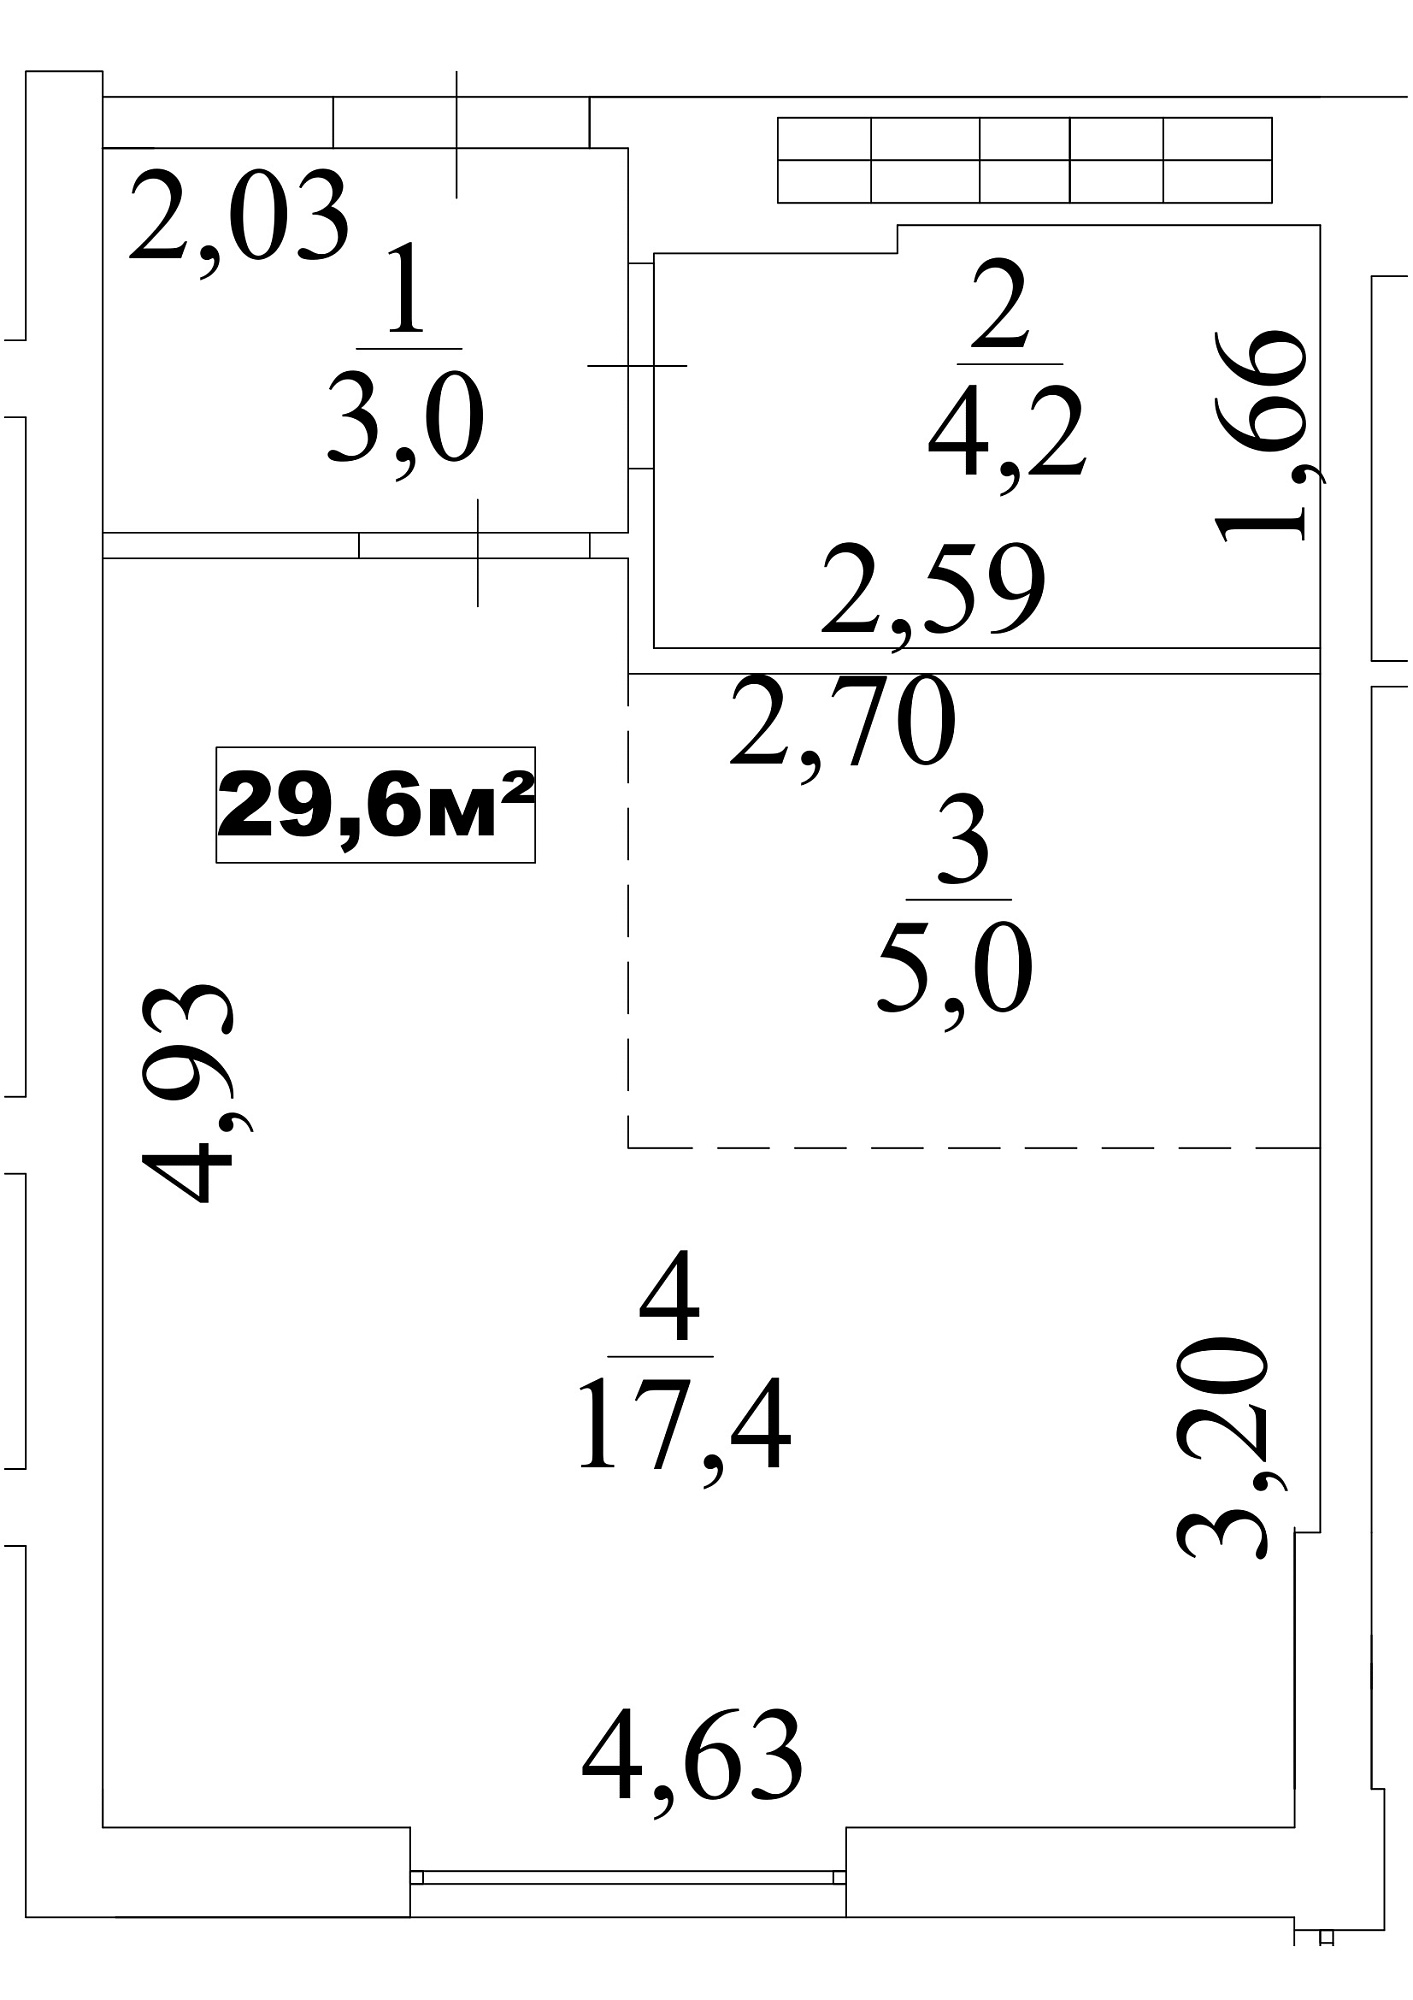 Планировка Smart-квартира площей 29.6м2, AB-10-05/00045.